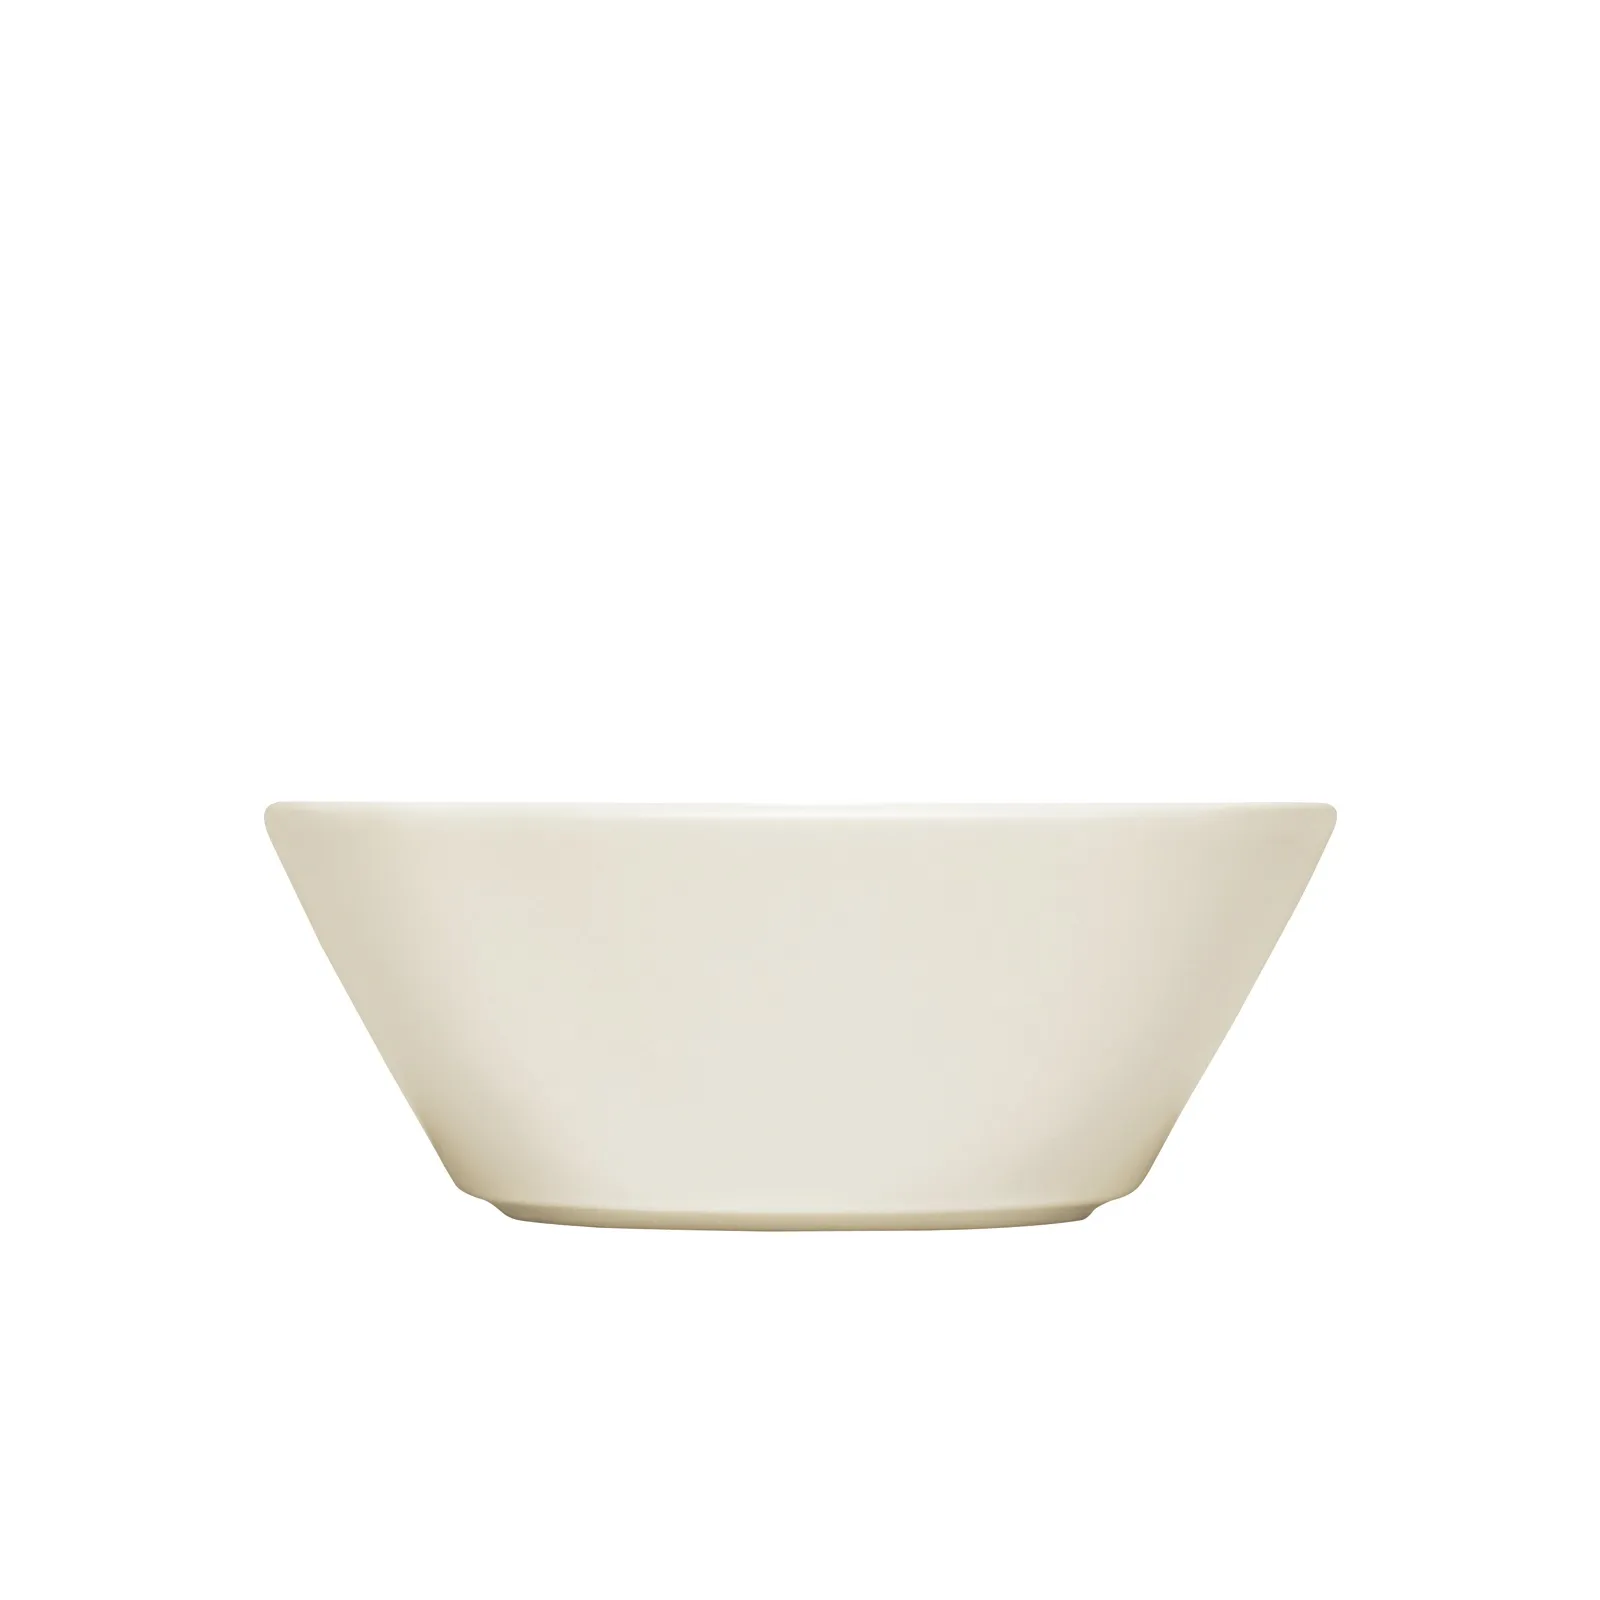 Iittala Teema bowl 15cm white